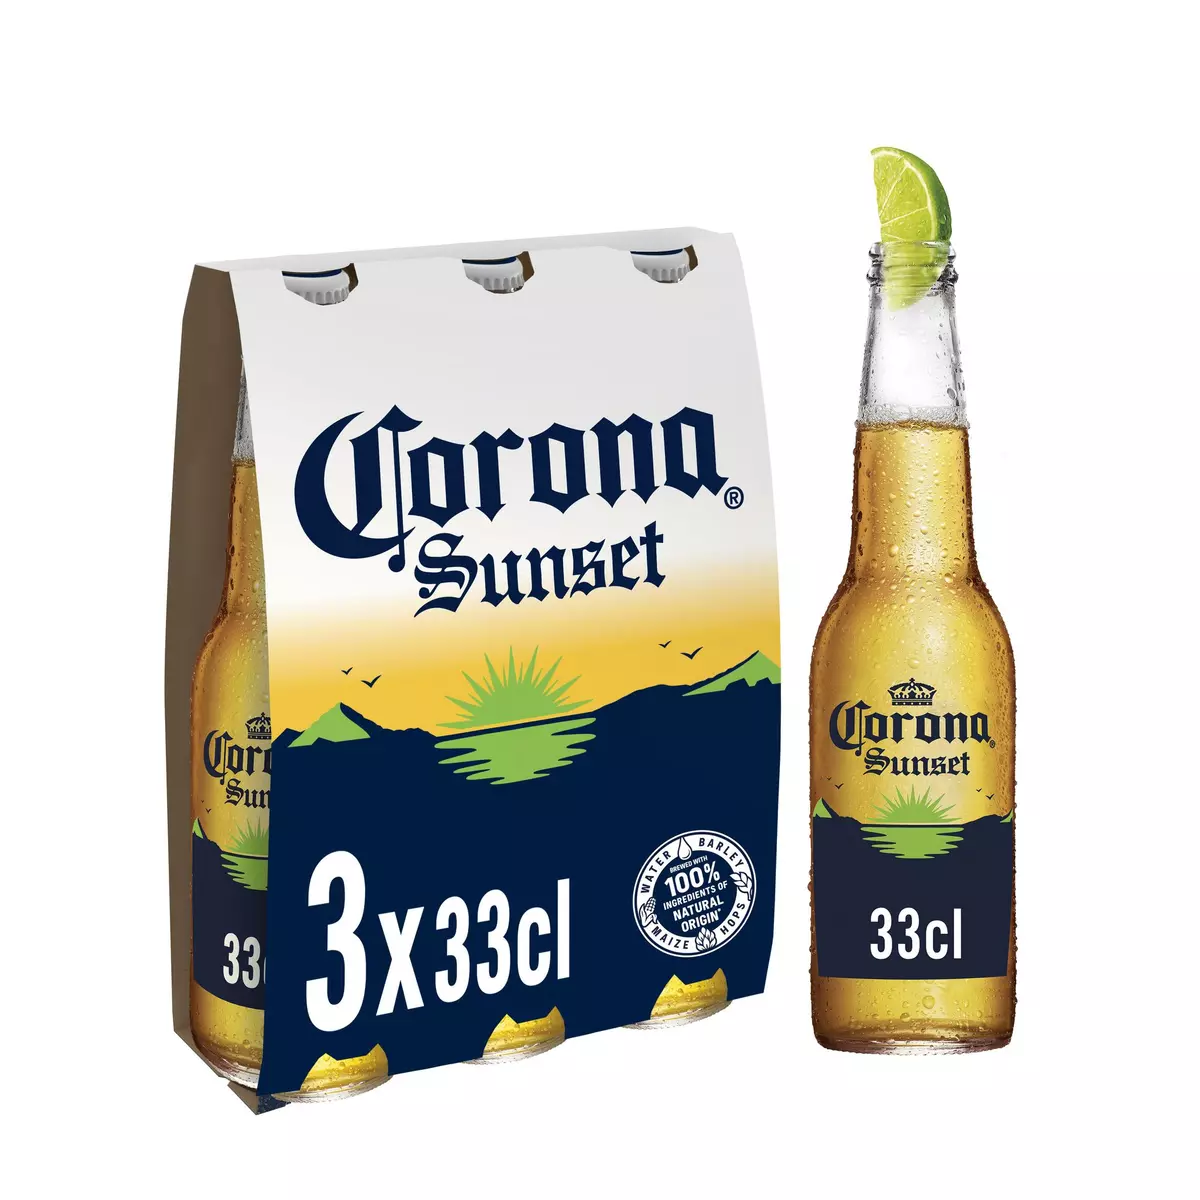 CORONA SUNSET Bière blonde extra 5.9% 3x33cl